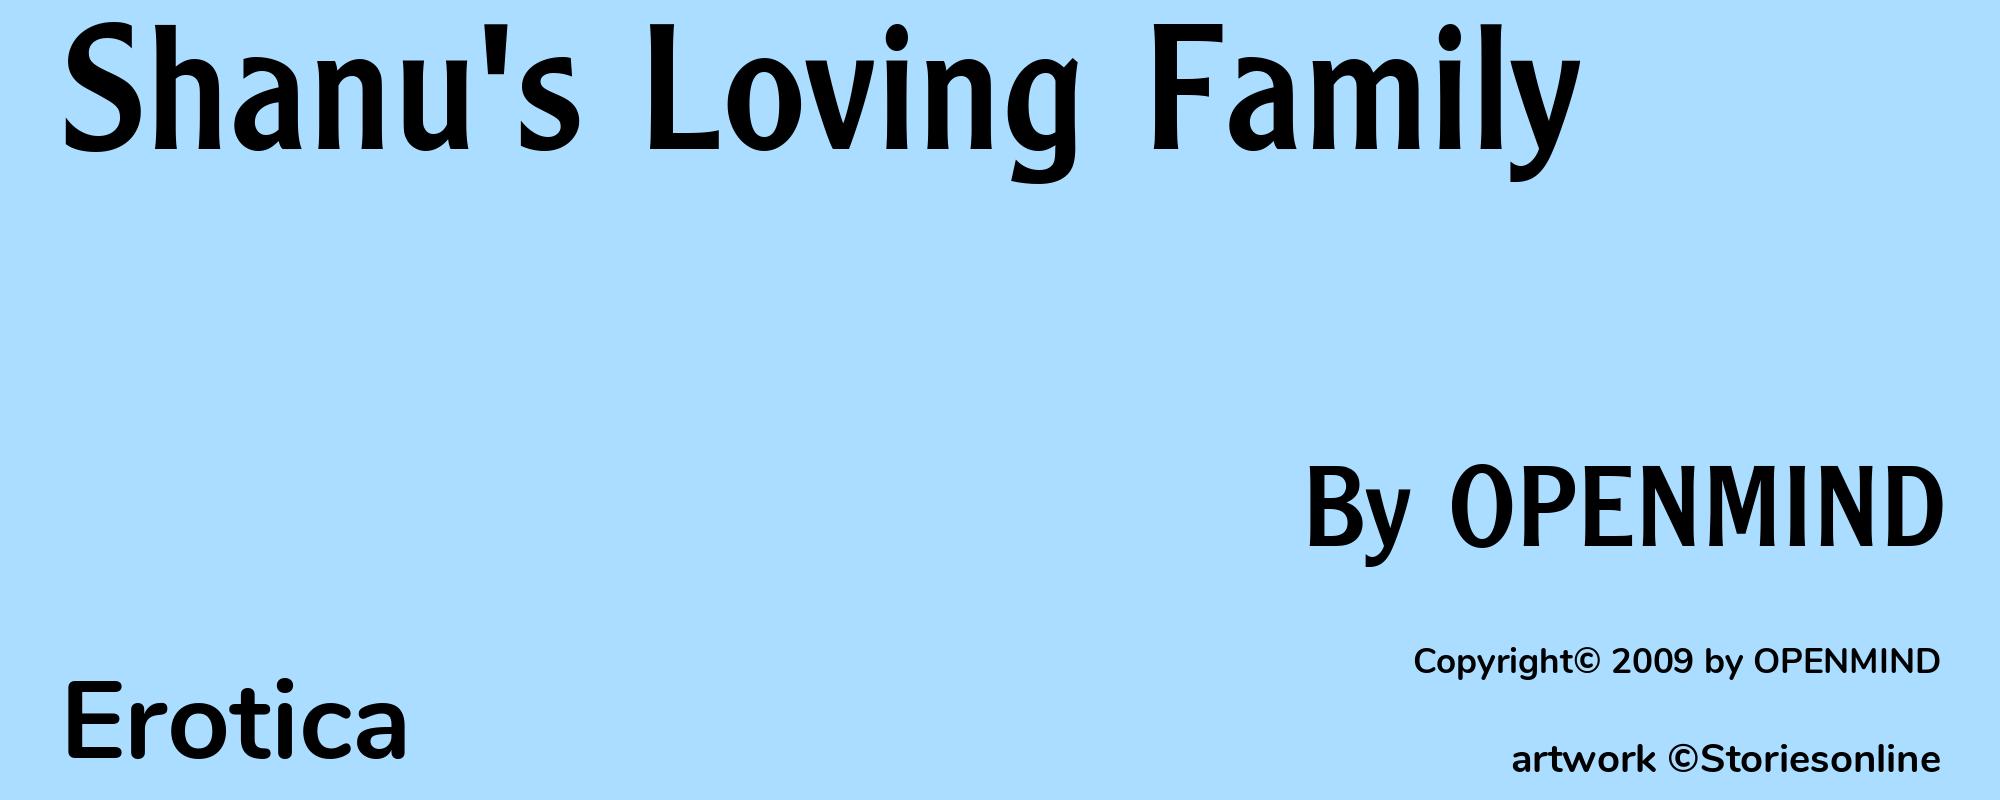 Shanu's Loving Family - Cover